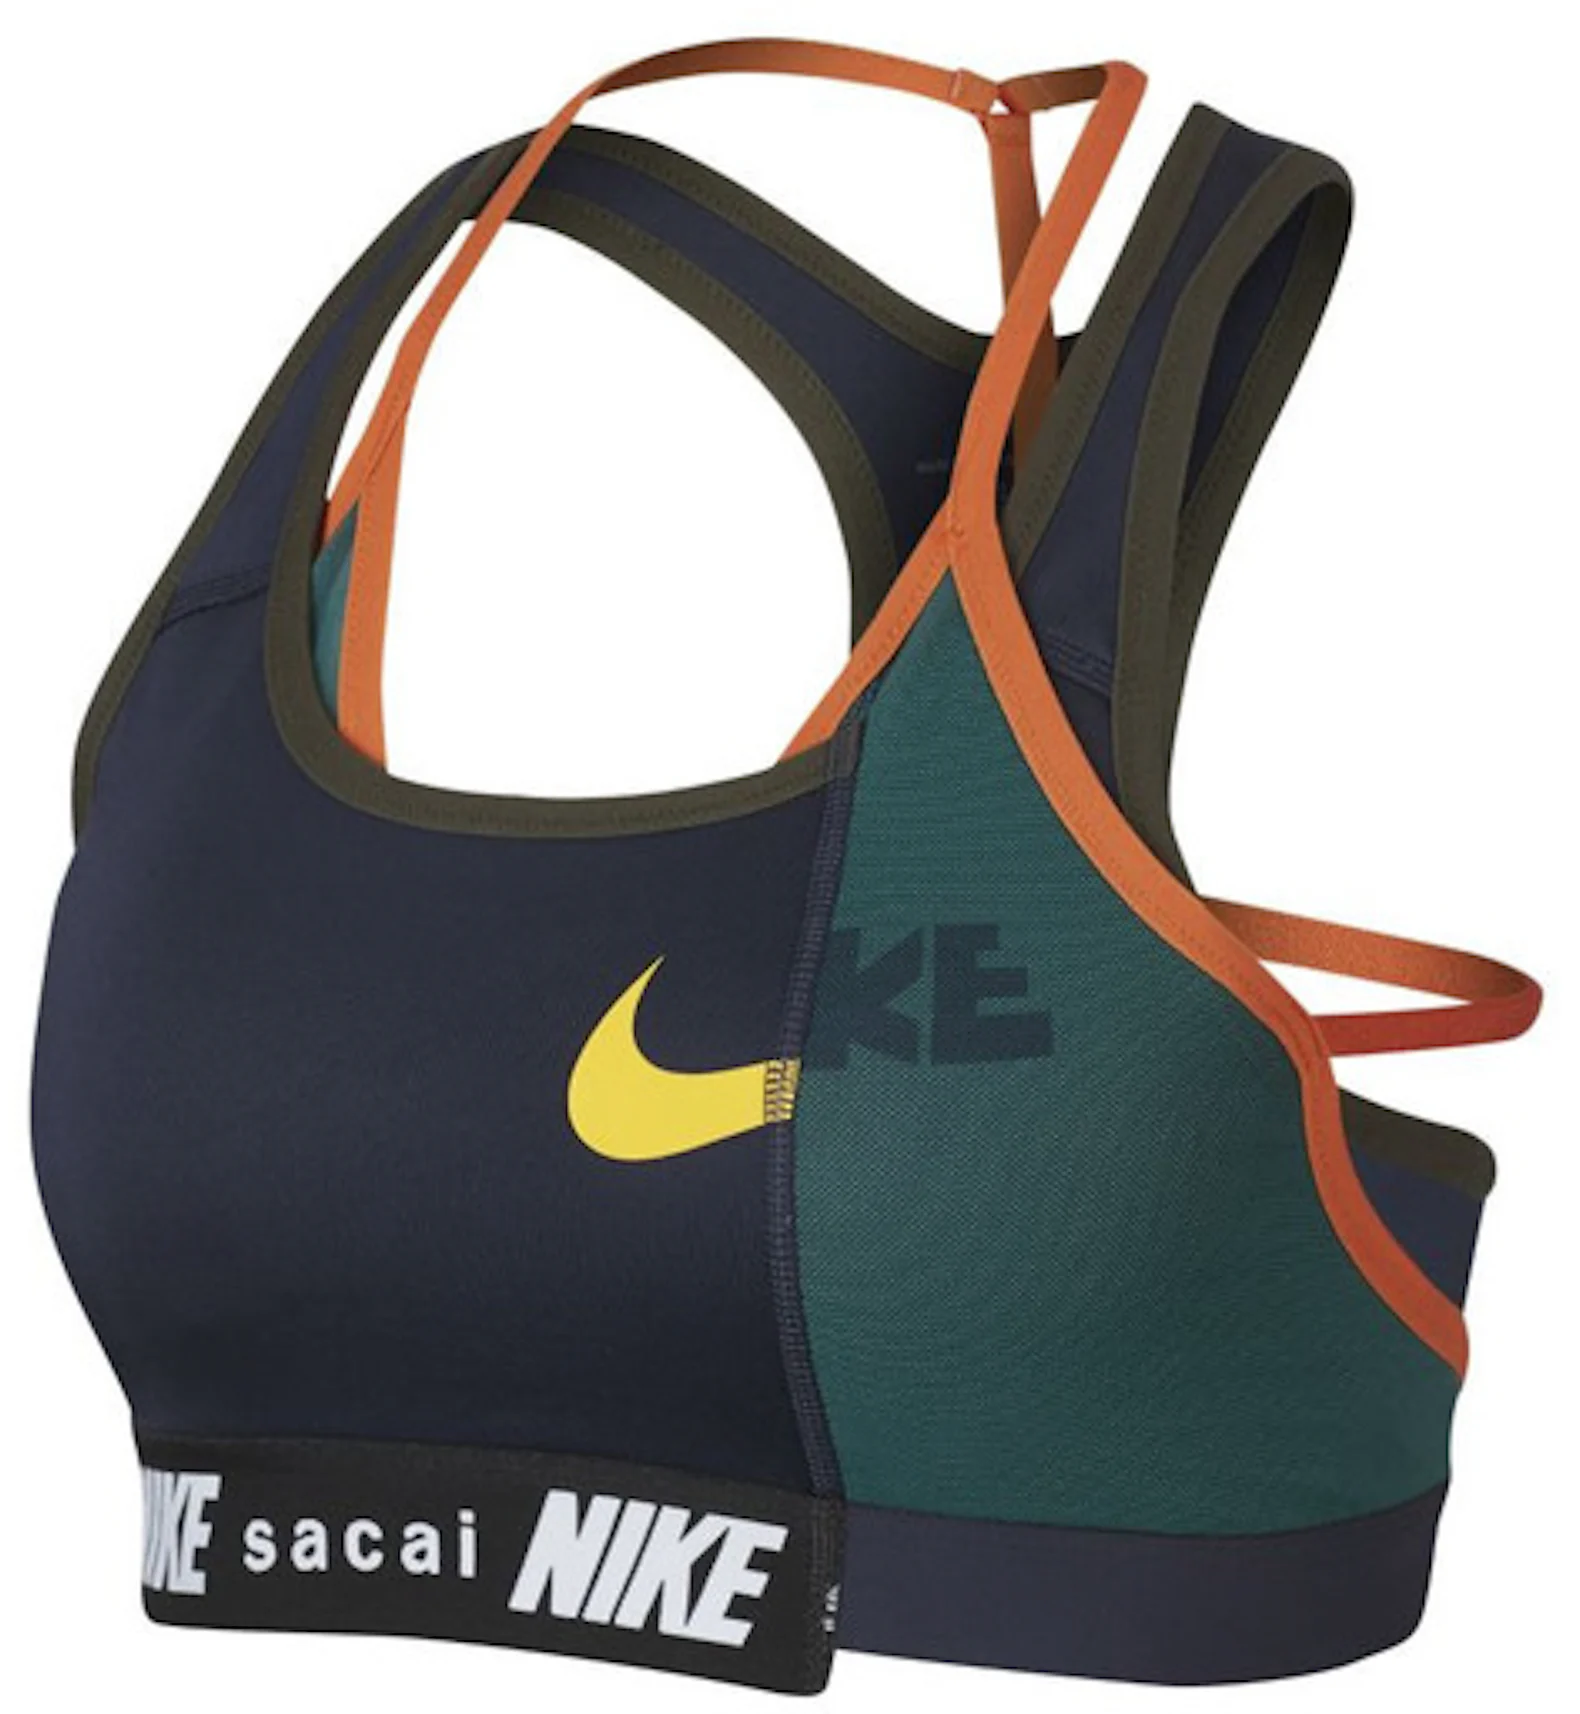 https://images.stockx.com/images/Nike-x-Sacai-Sports-Bra-Navy-Green.png?fit=fill&bg=FFFFFF&w=1200&h=857&fm=webp&auto=compress&dpr=2&trim=color&updated_at=1628733657&q=60